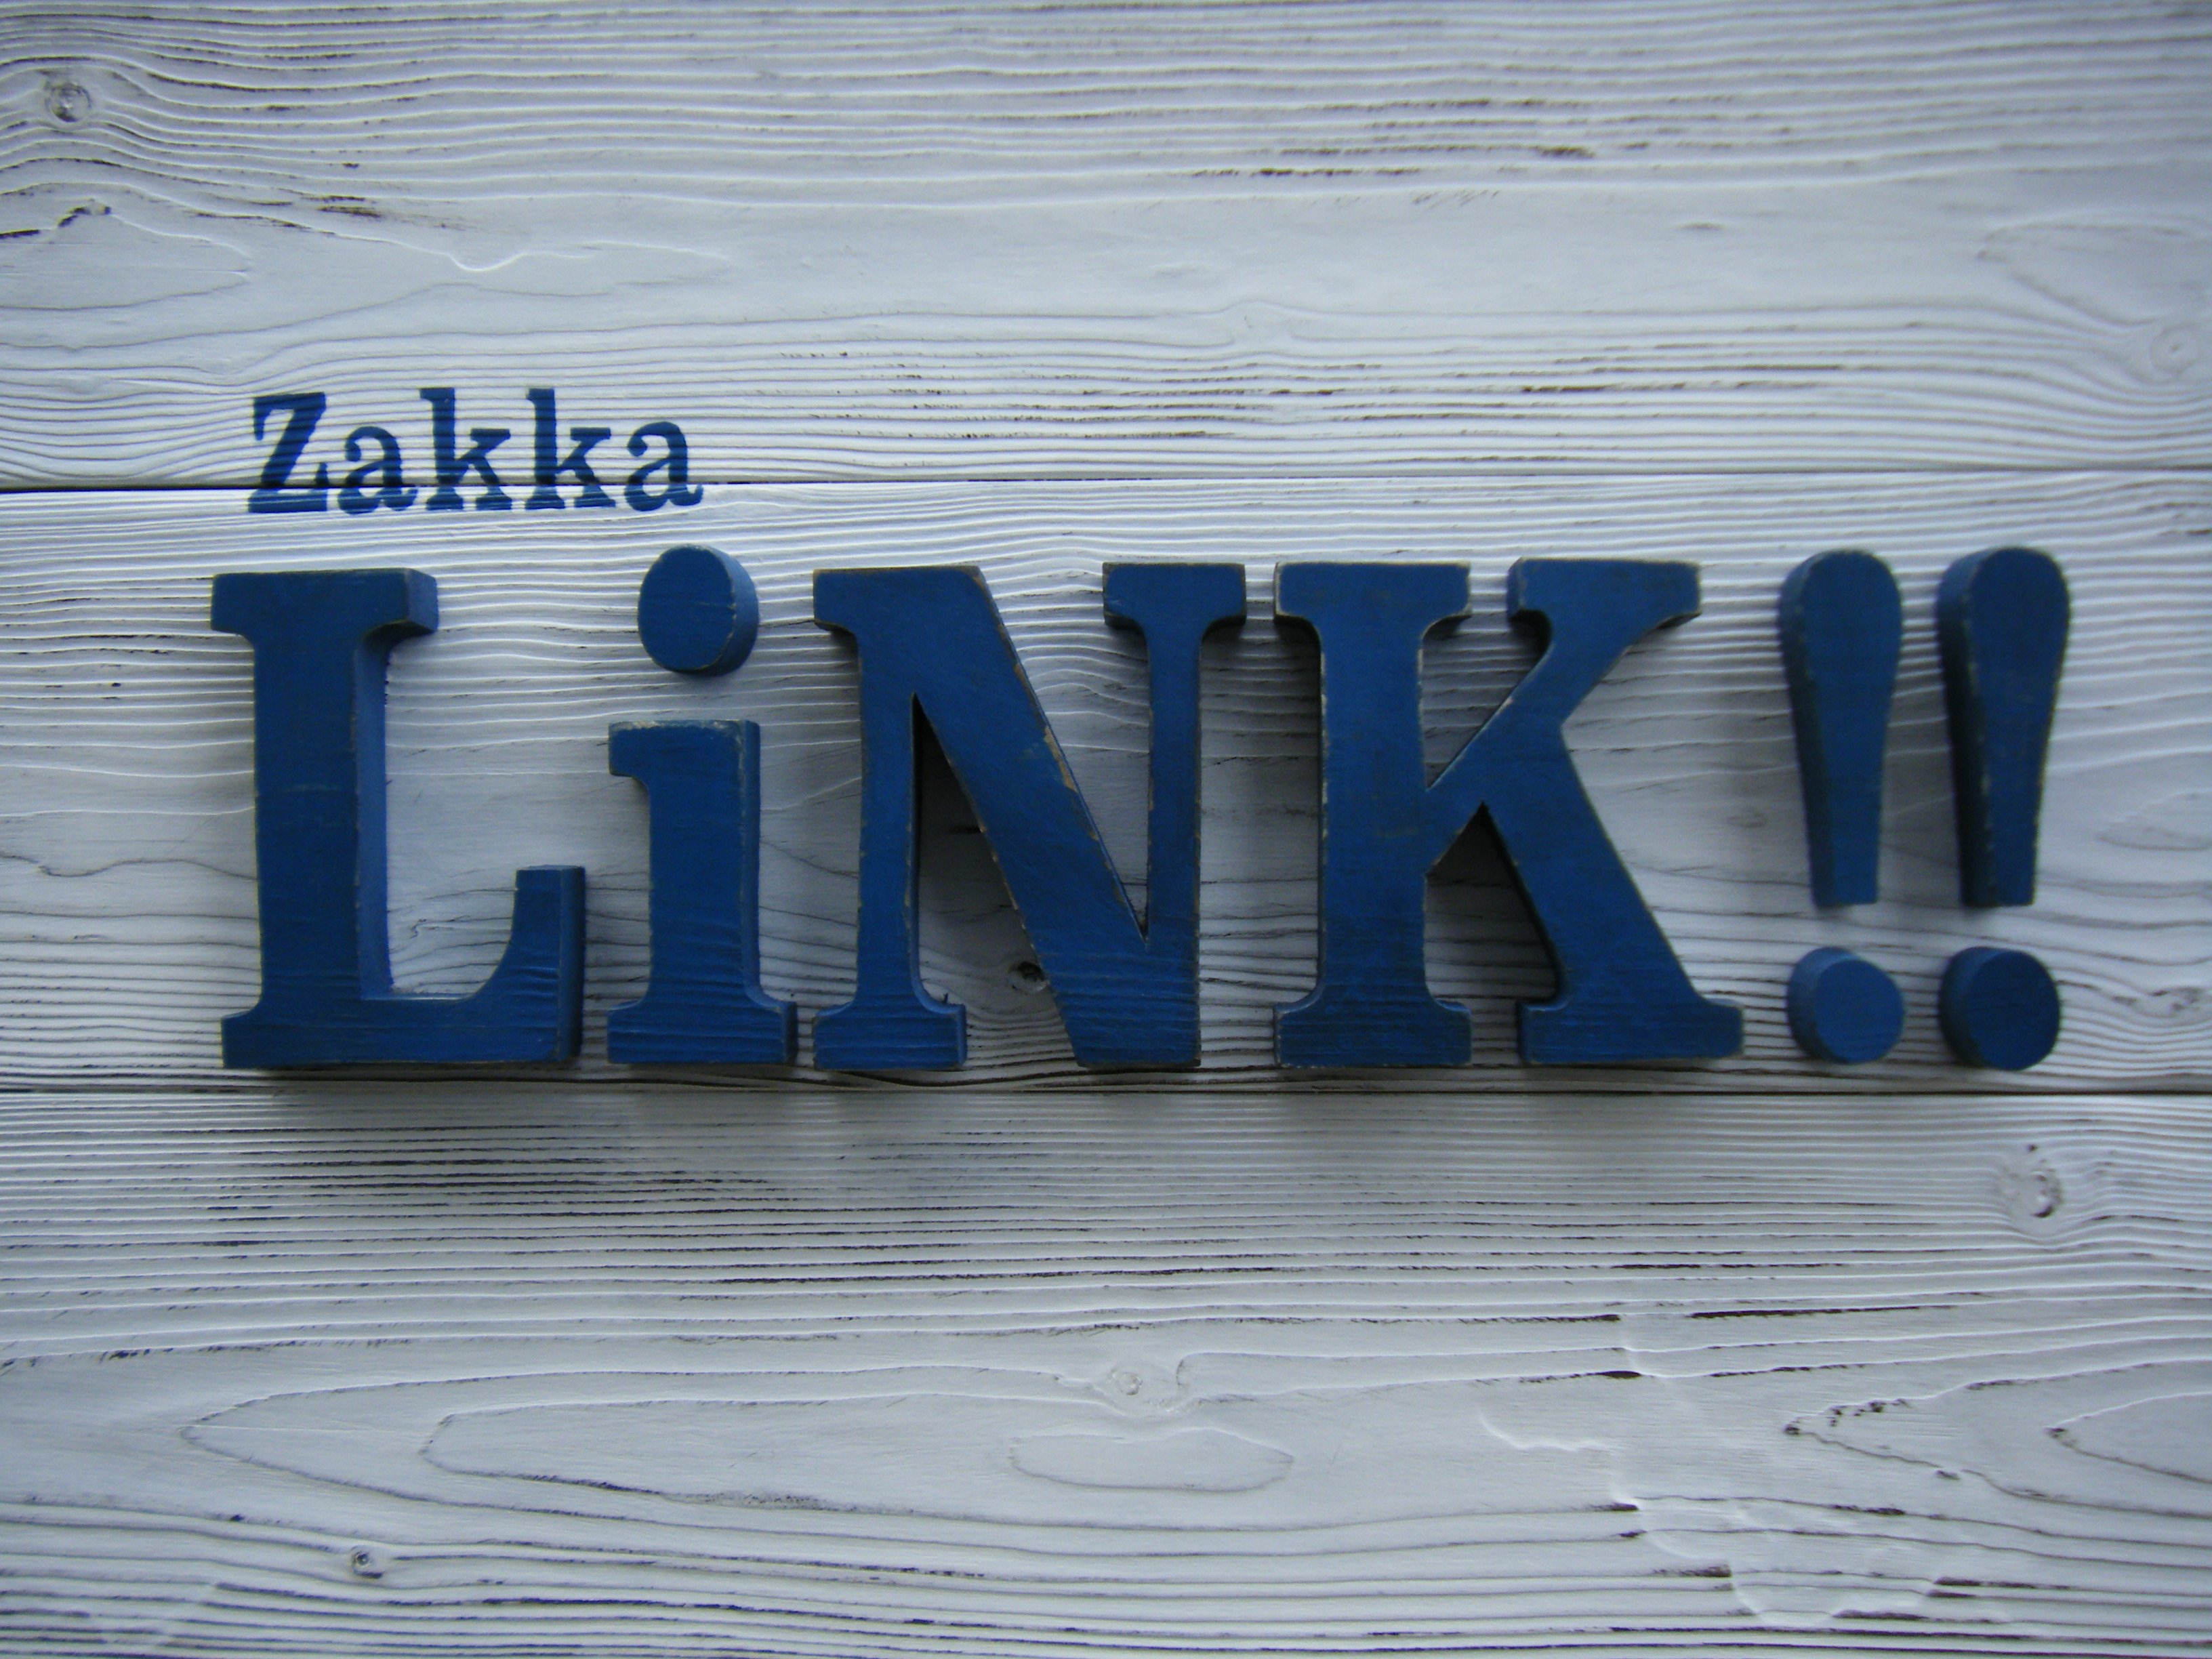 ＊＊＊Zakka LiNK!!のブログ＊＊＊